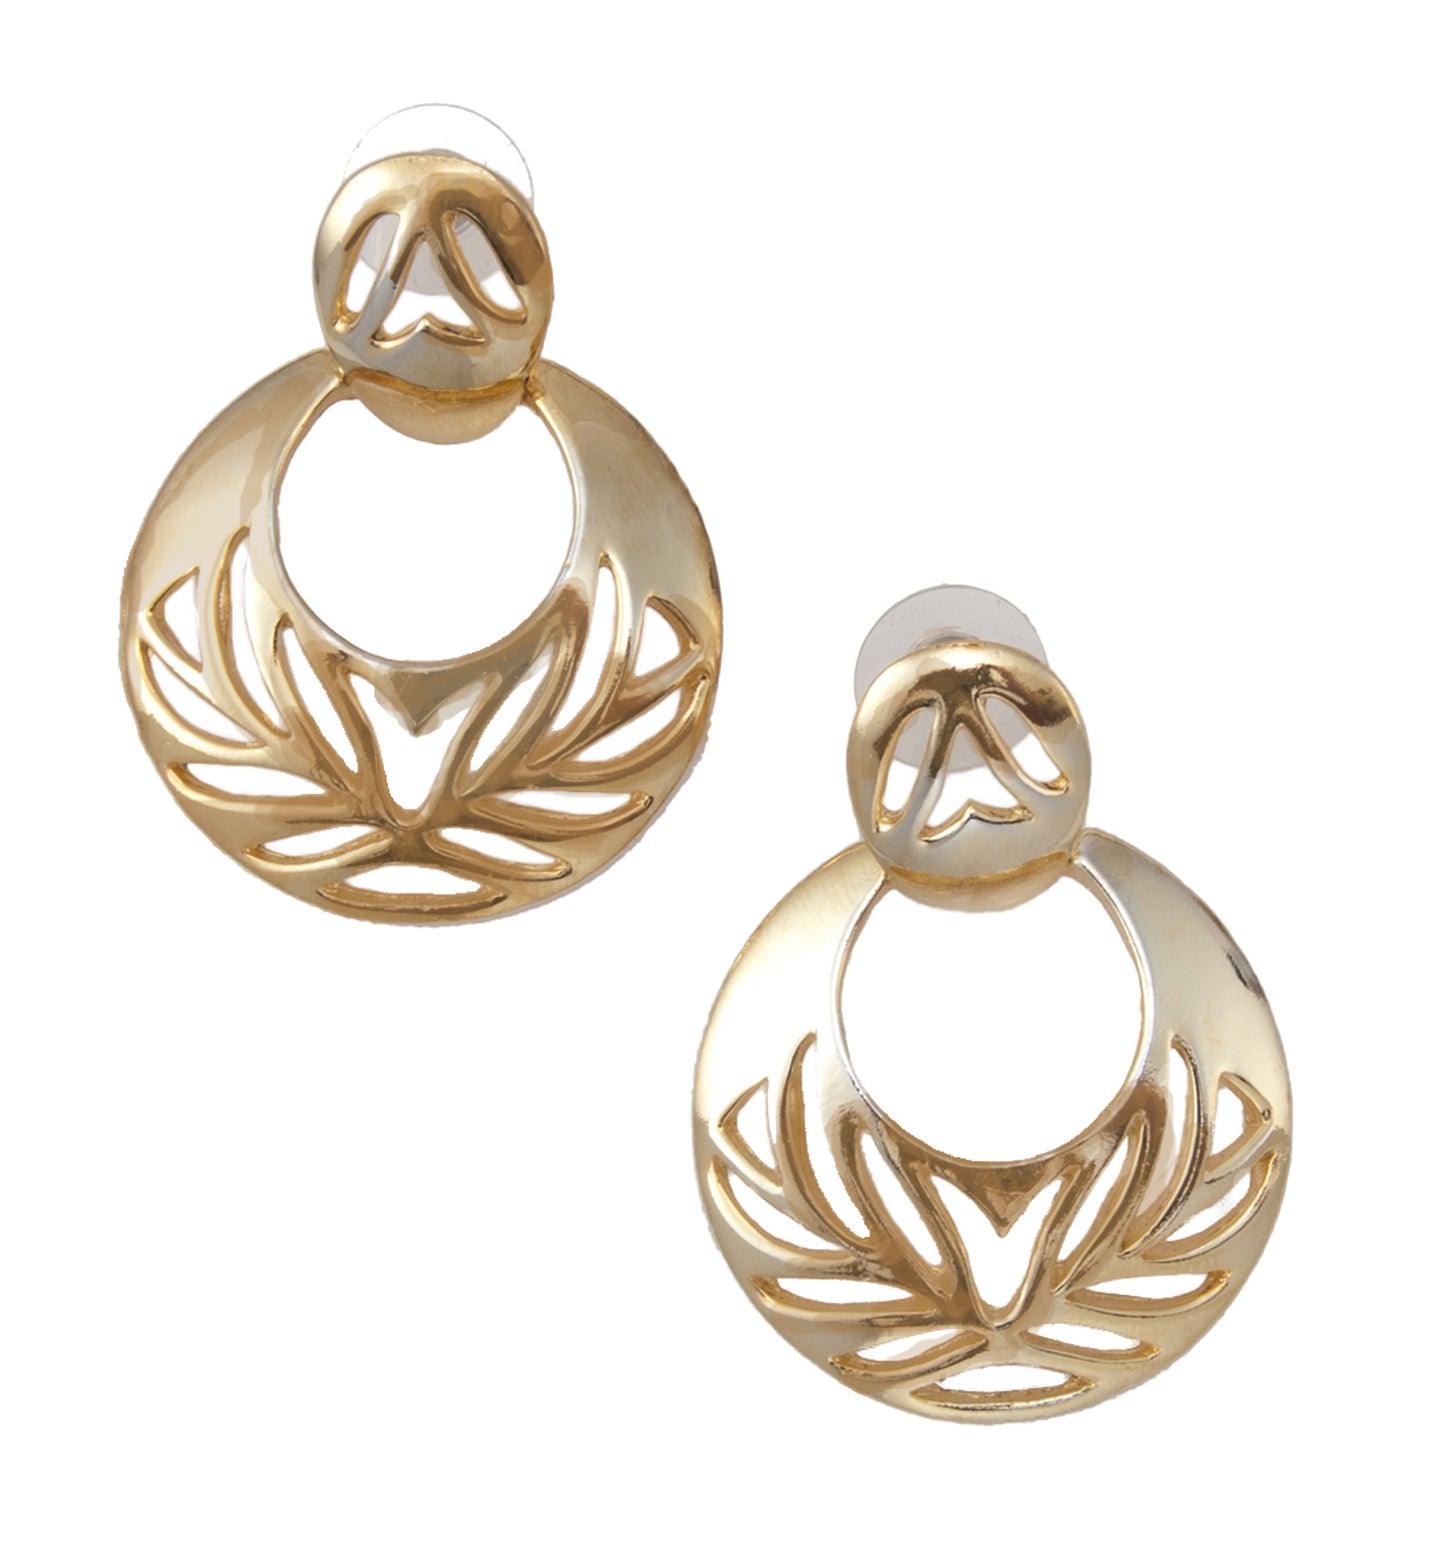 Openwork Leaf Design Door Knocker Earrings Pierced Drop - Gold Tone 2"